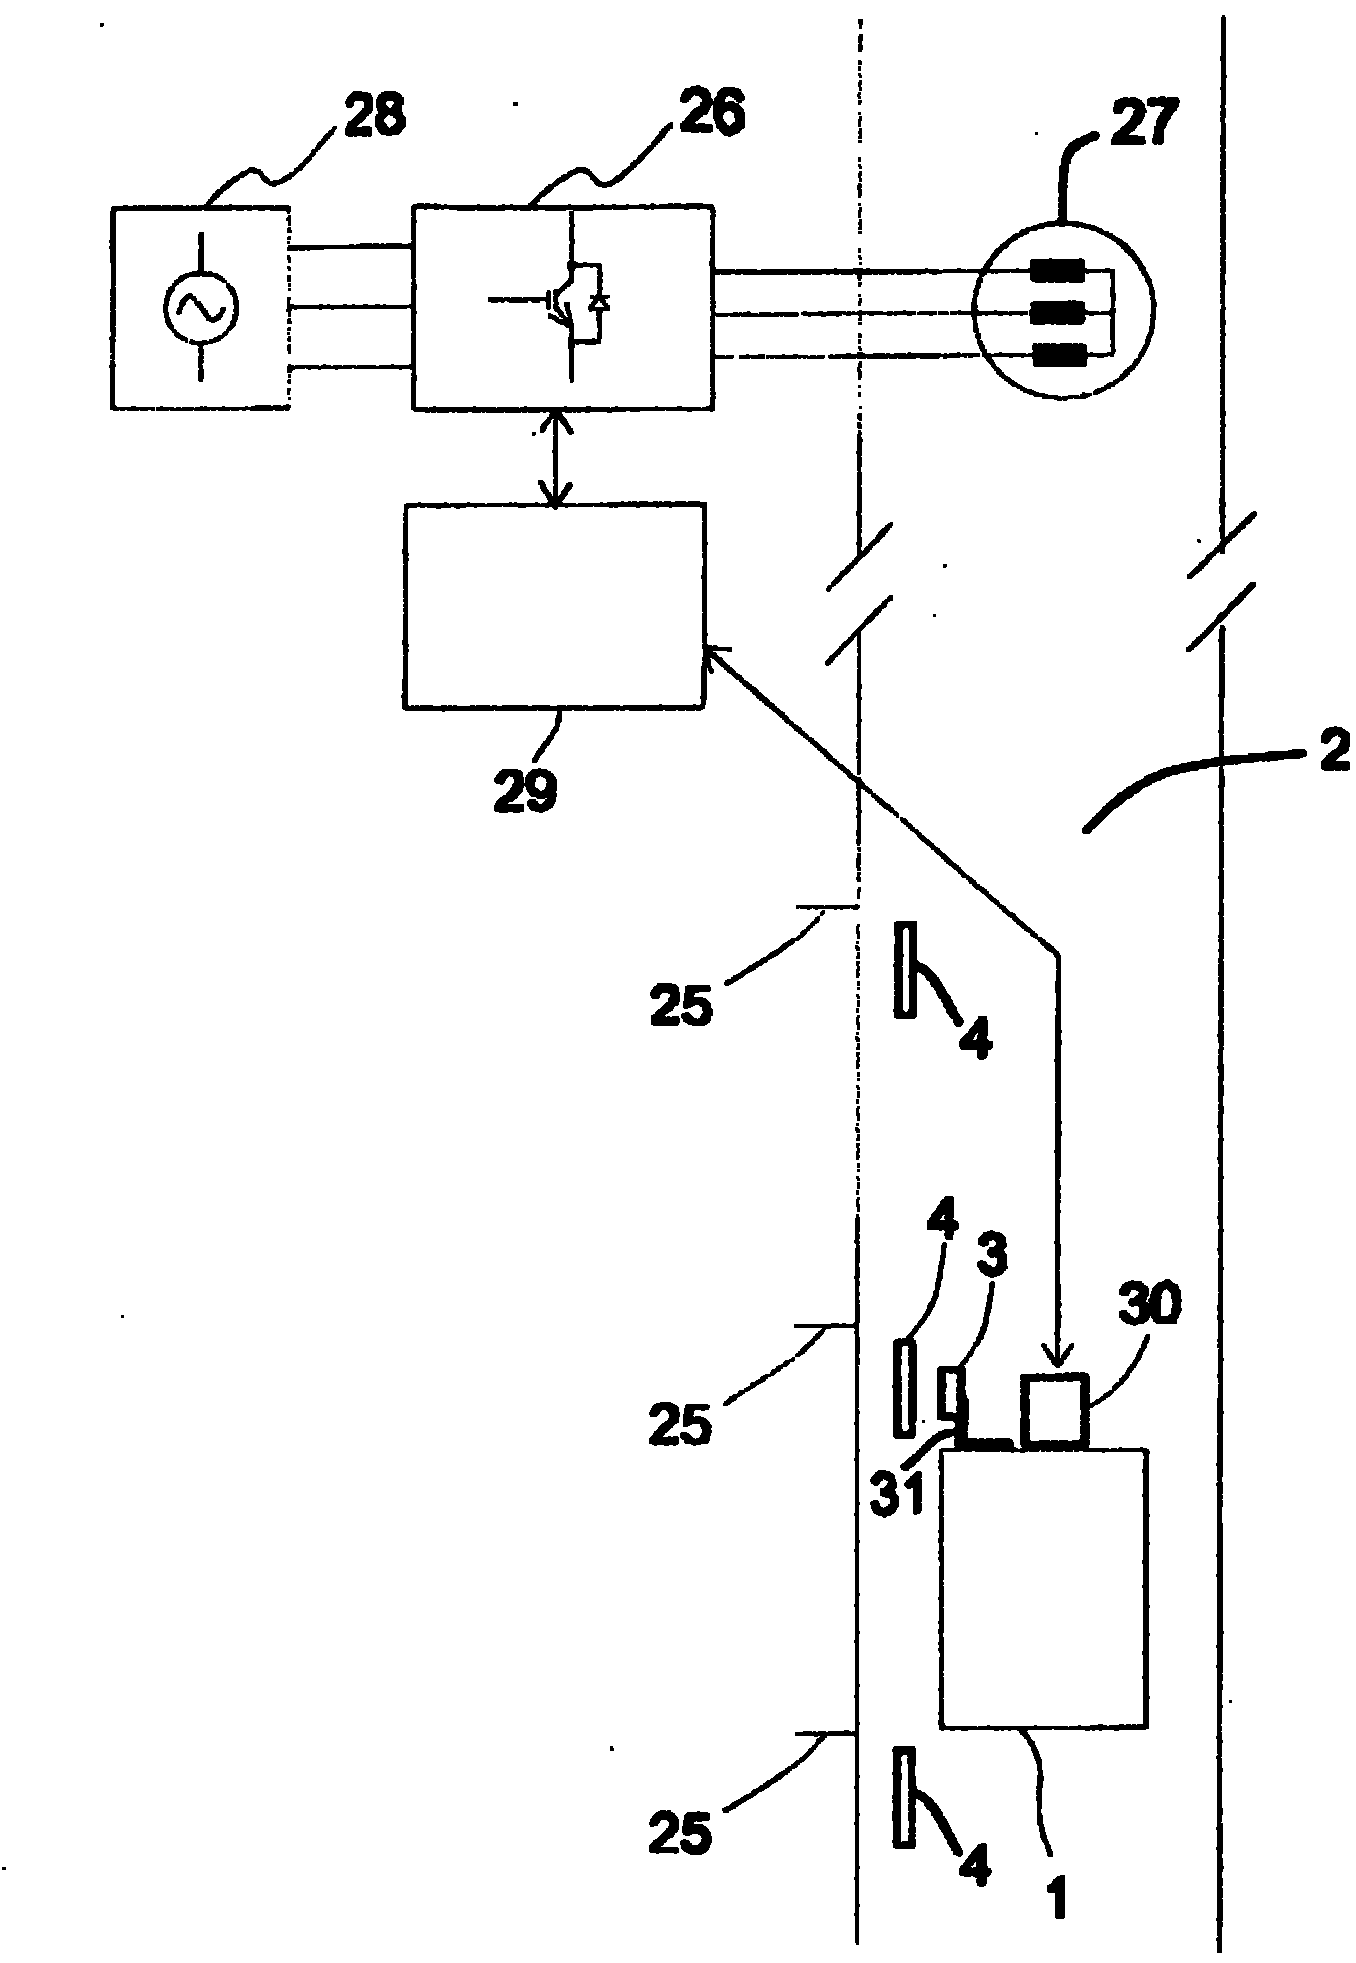 Arrangement and method for determining position of elevator car